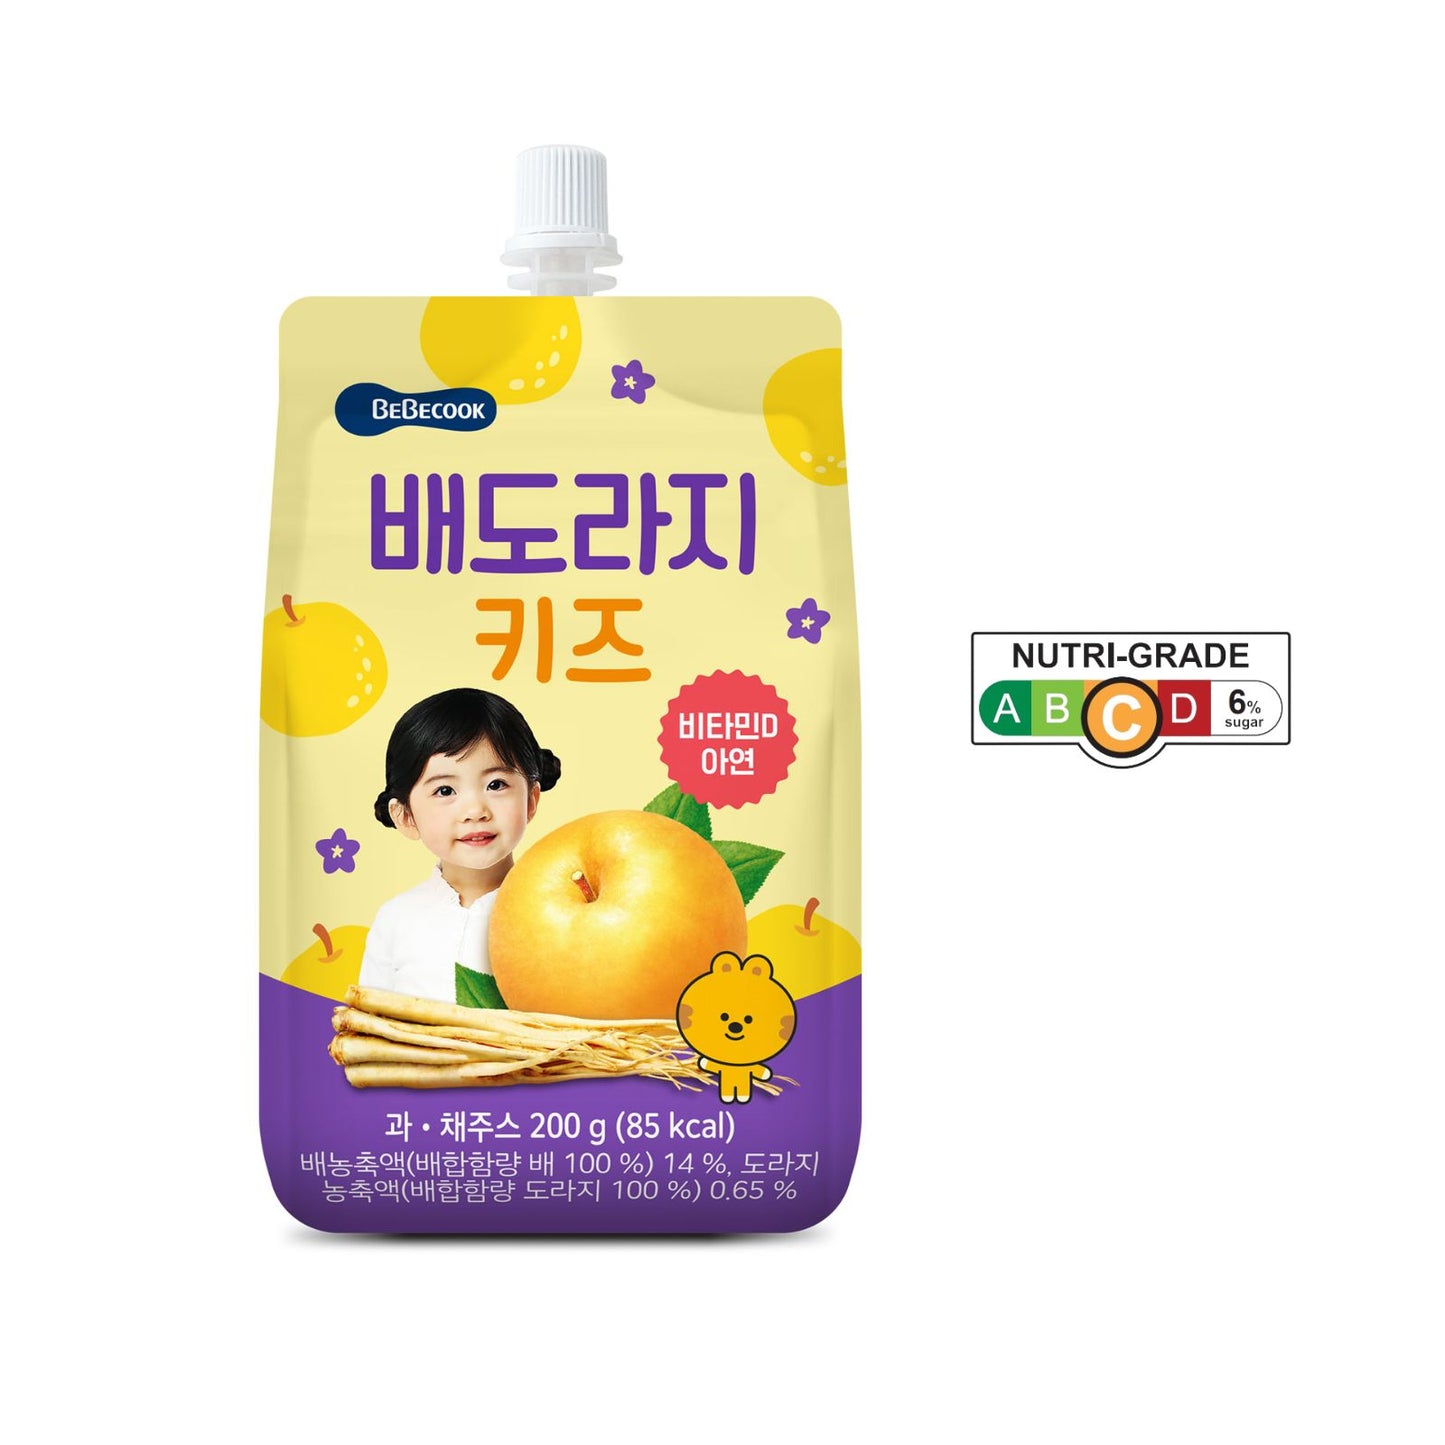 BeBecook - Junior's Korean Golden Pear Drink w Bellflower Root 200g